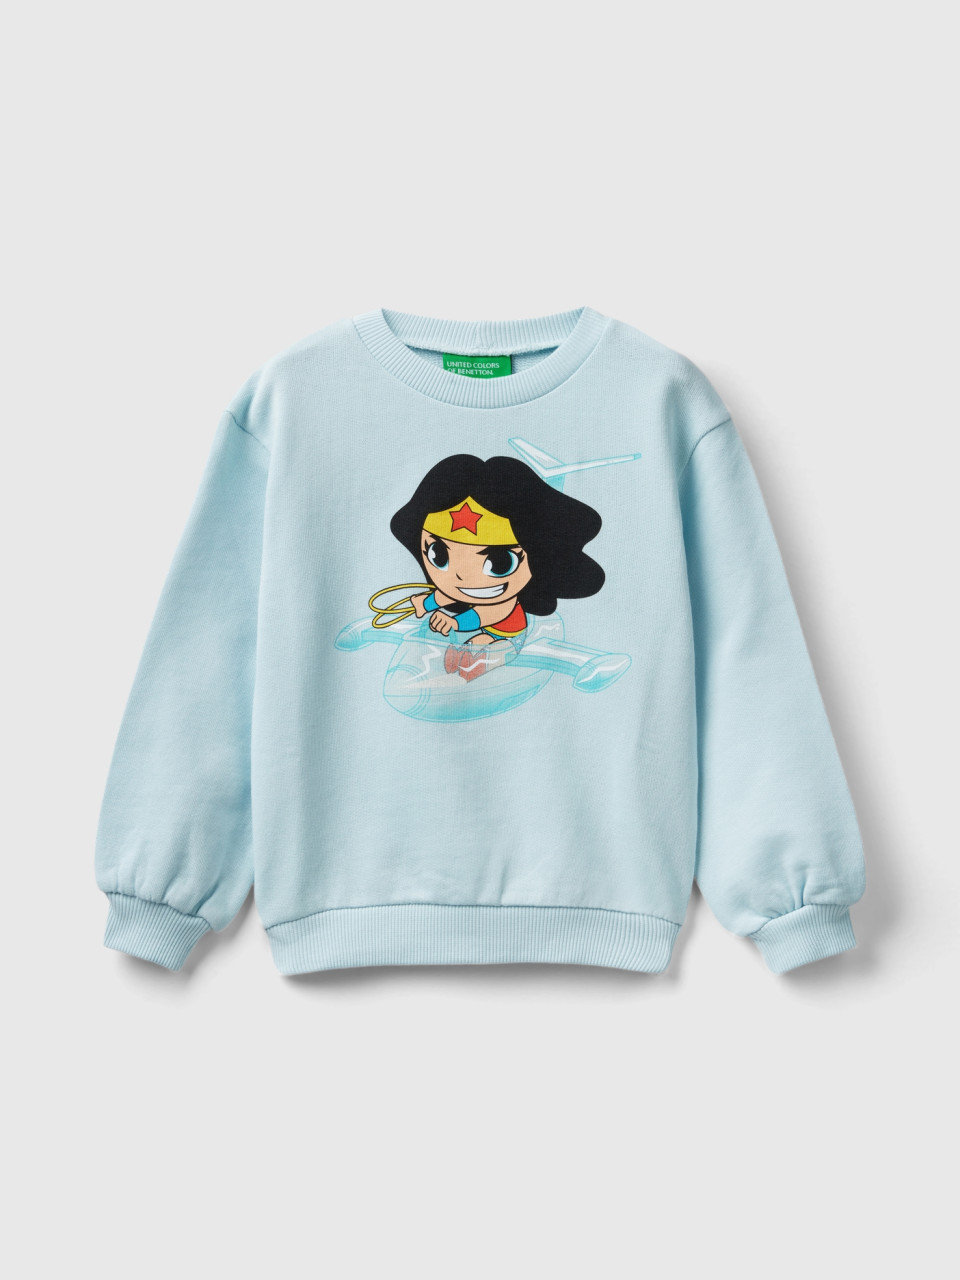 Benetton, Wonder Woman ©&™ Dc Comics Sweatshirt, Aqua, Kids